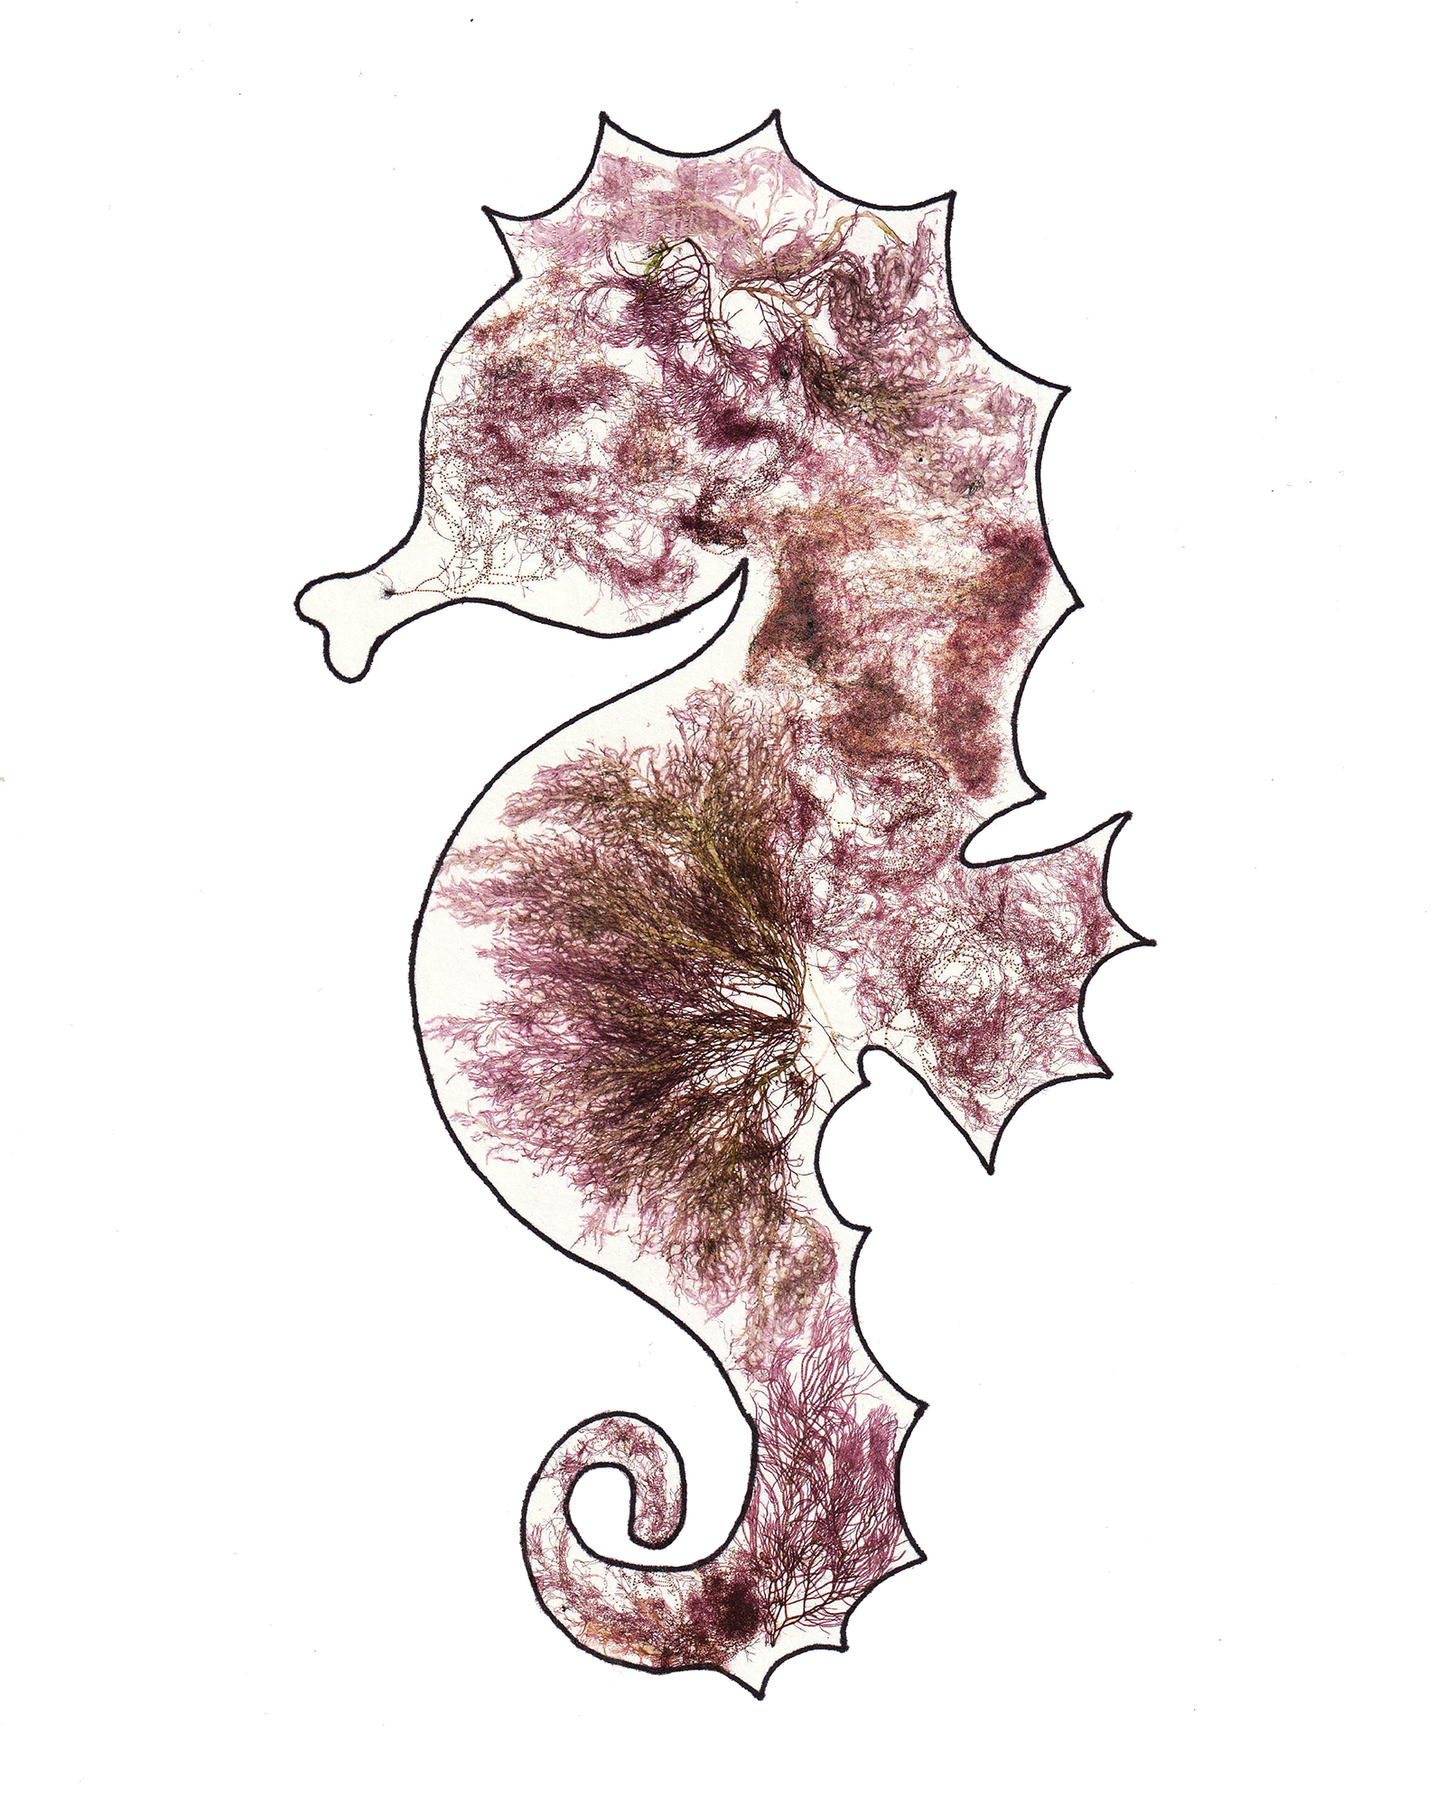 Seahorse Print